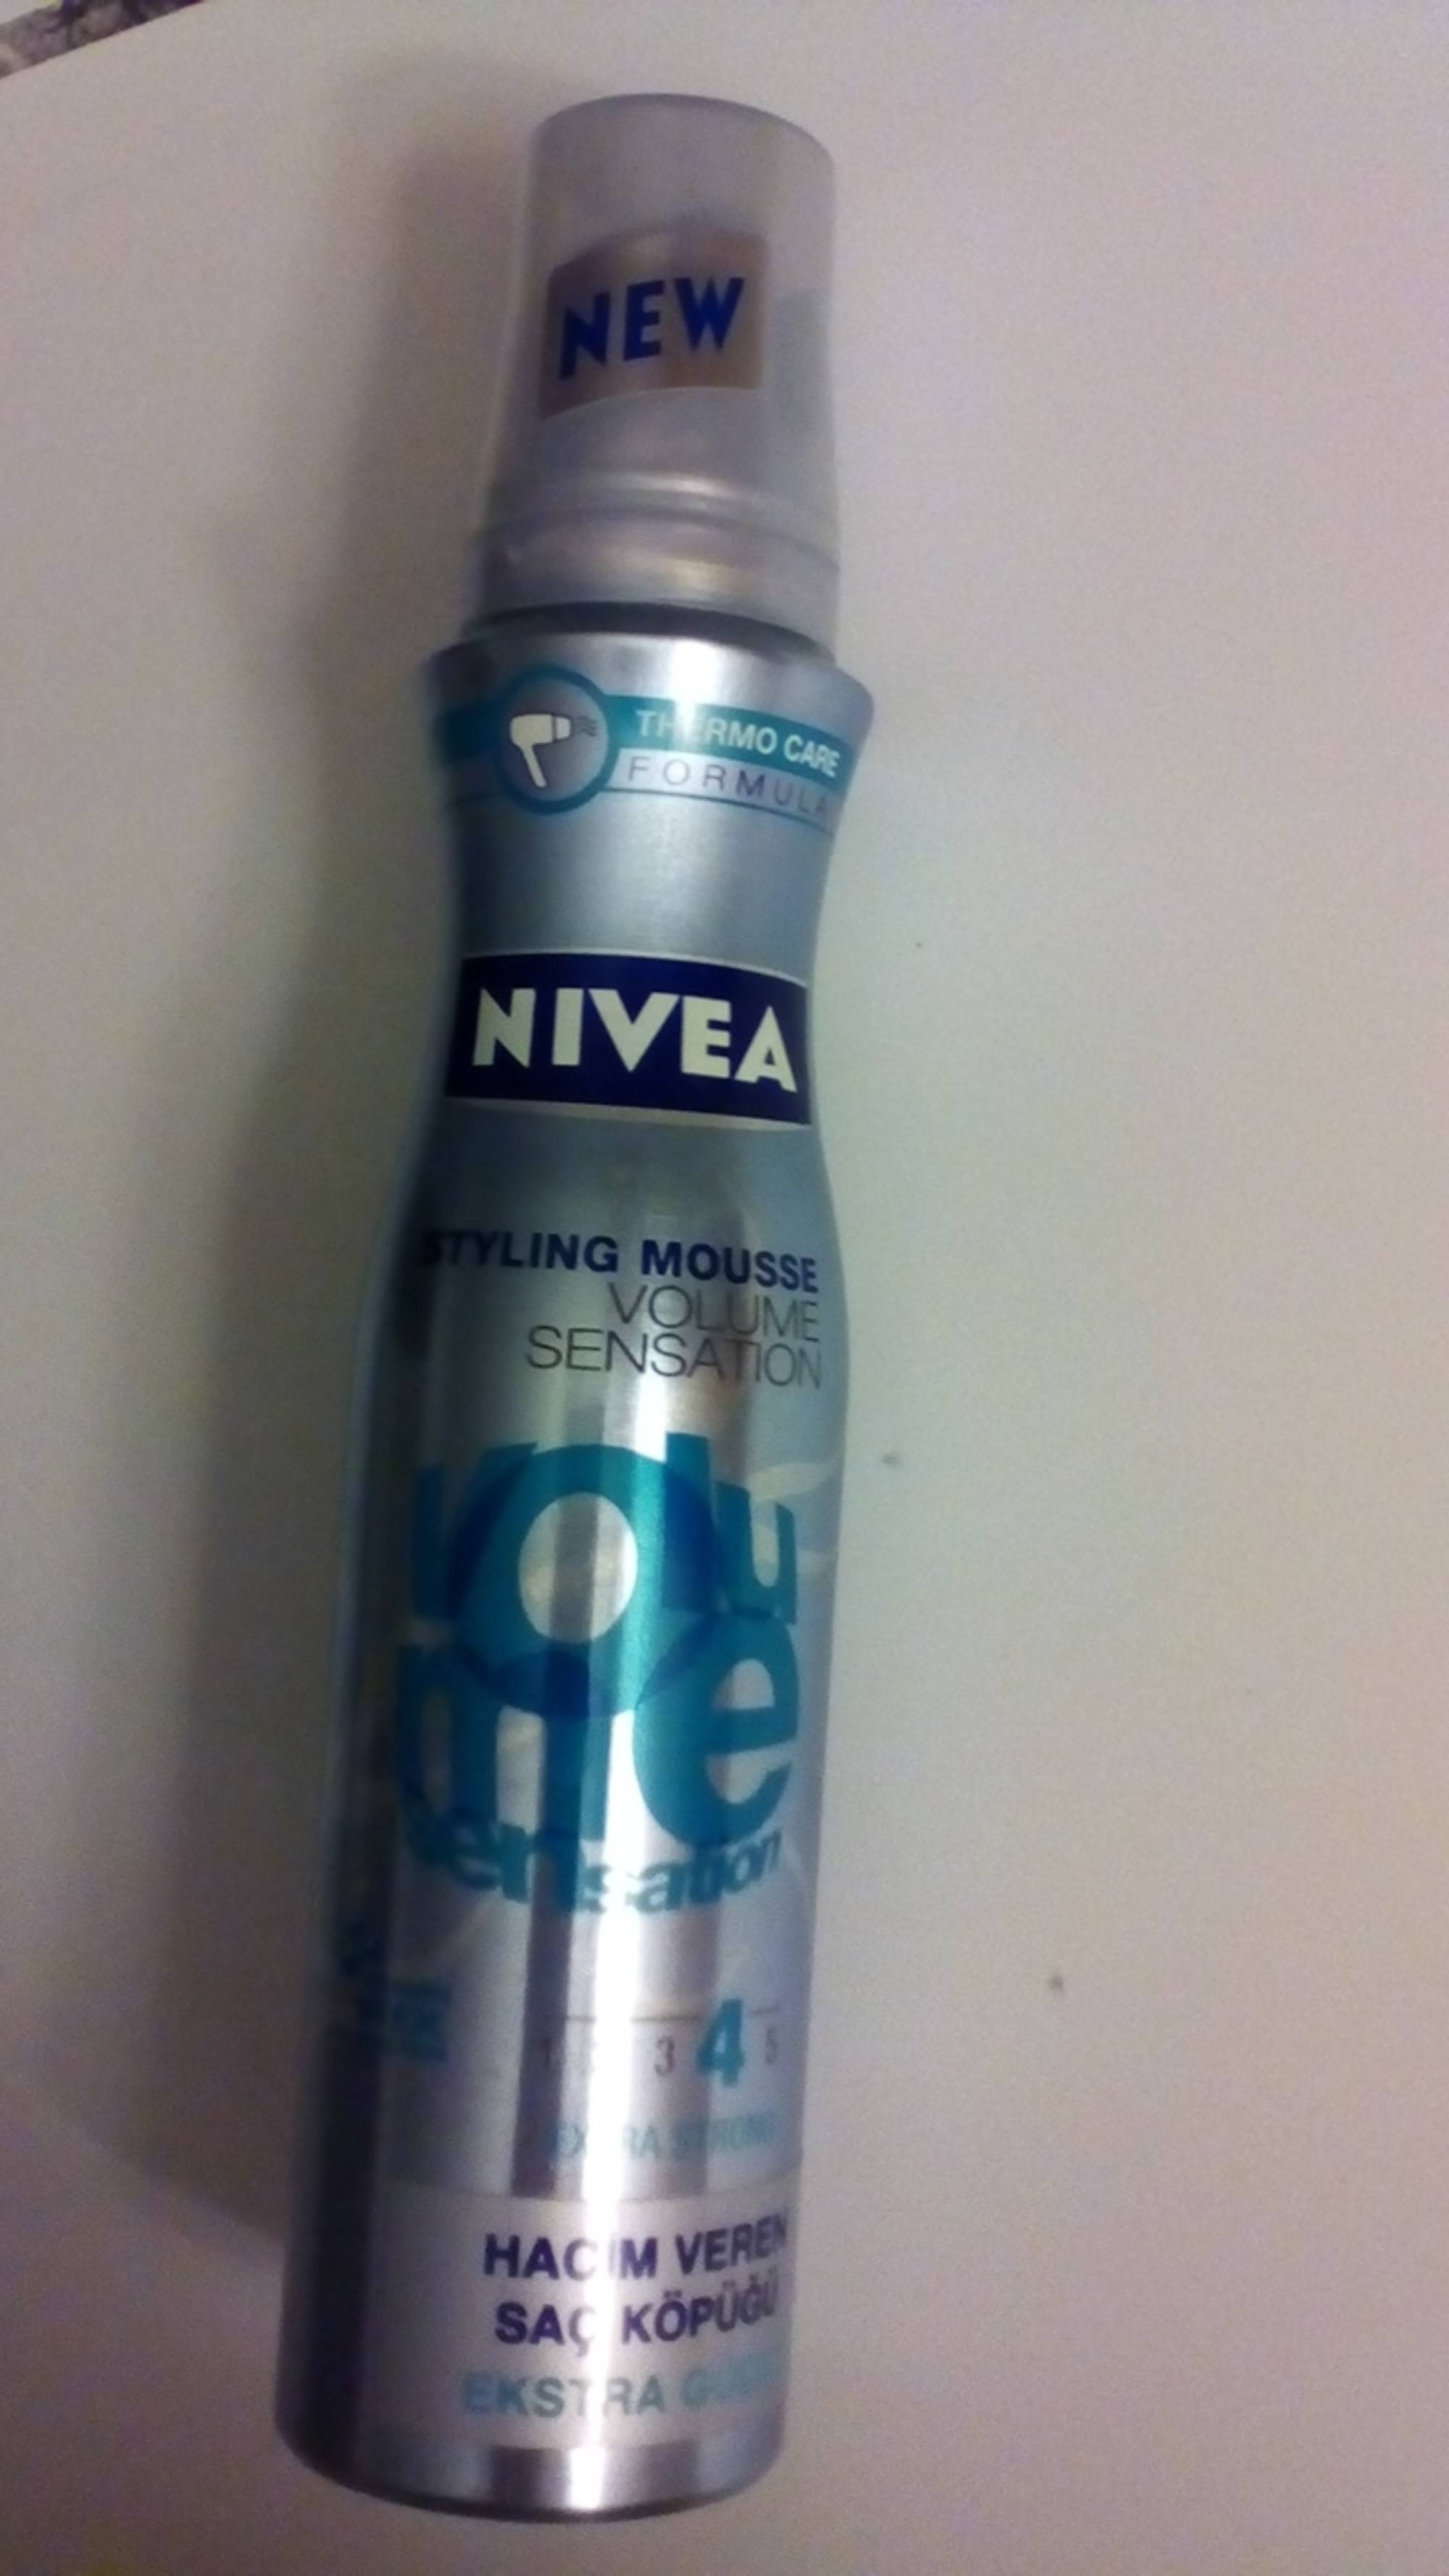 NIVEA - Volume sensation - Styling mousse